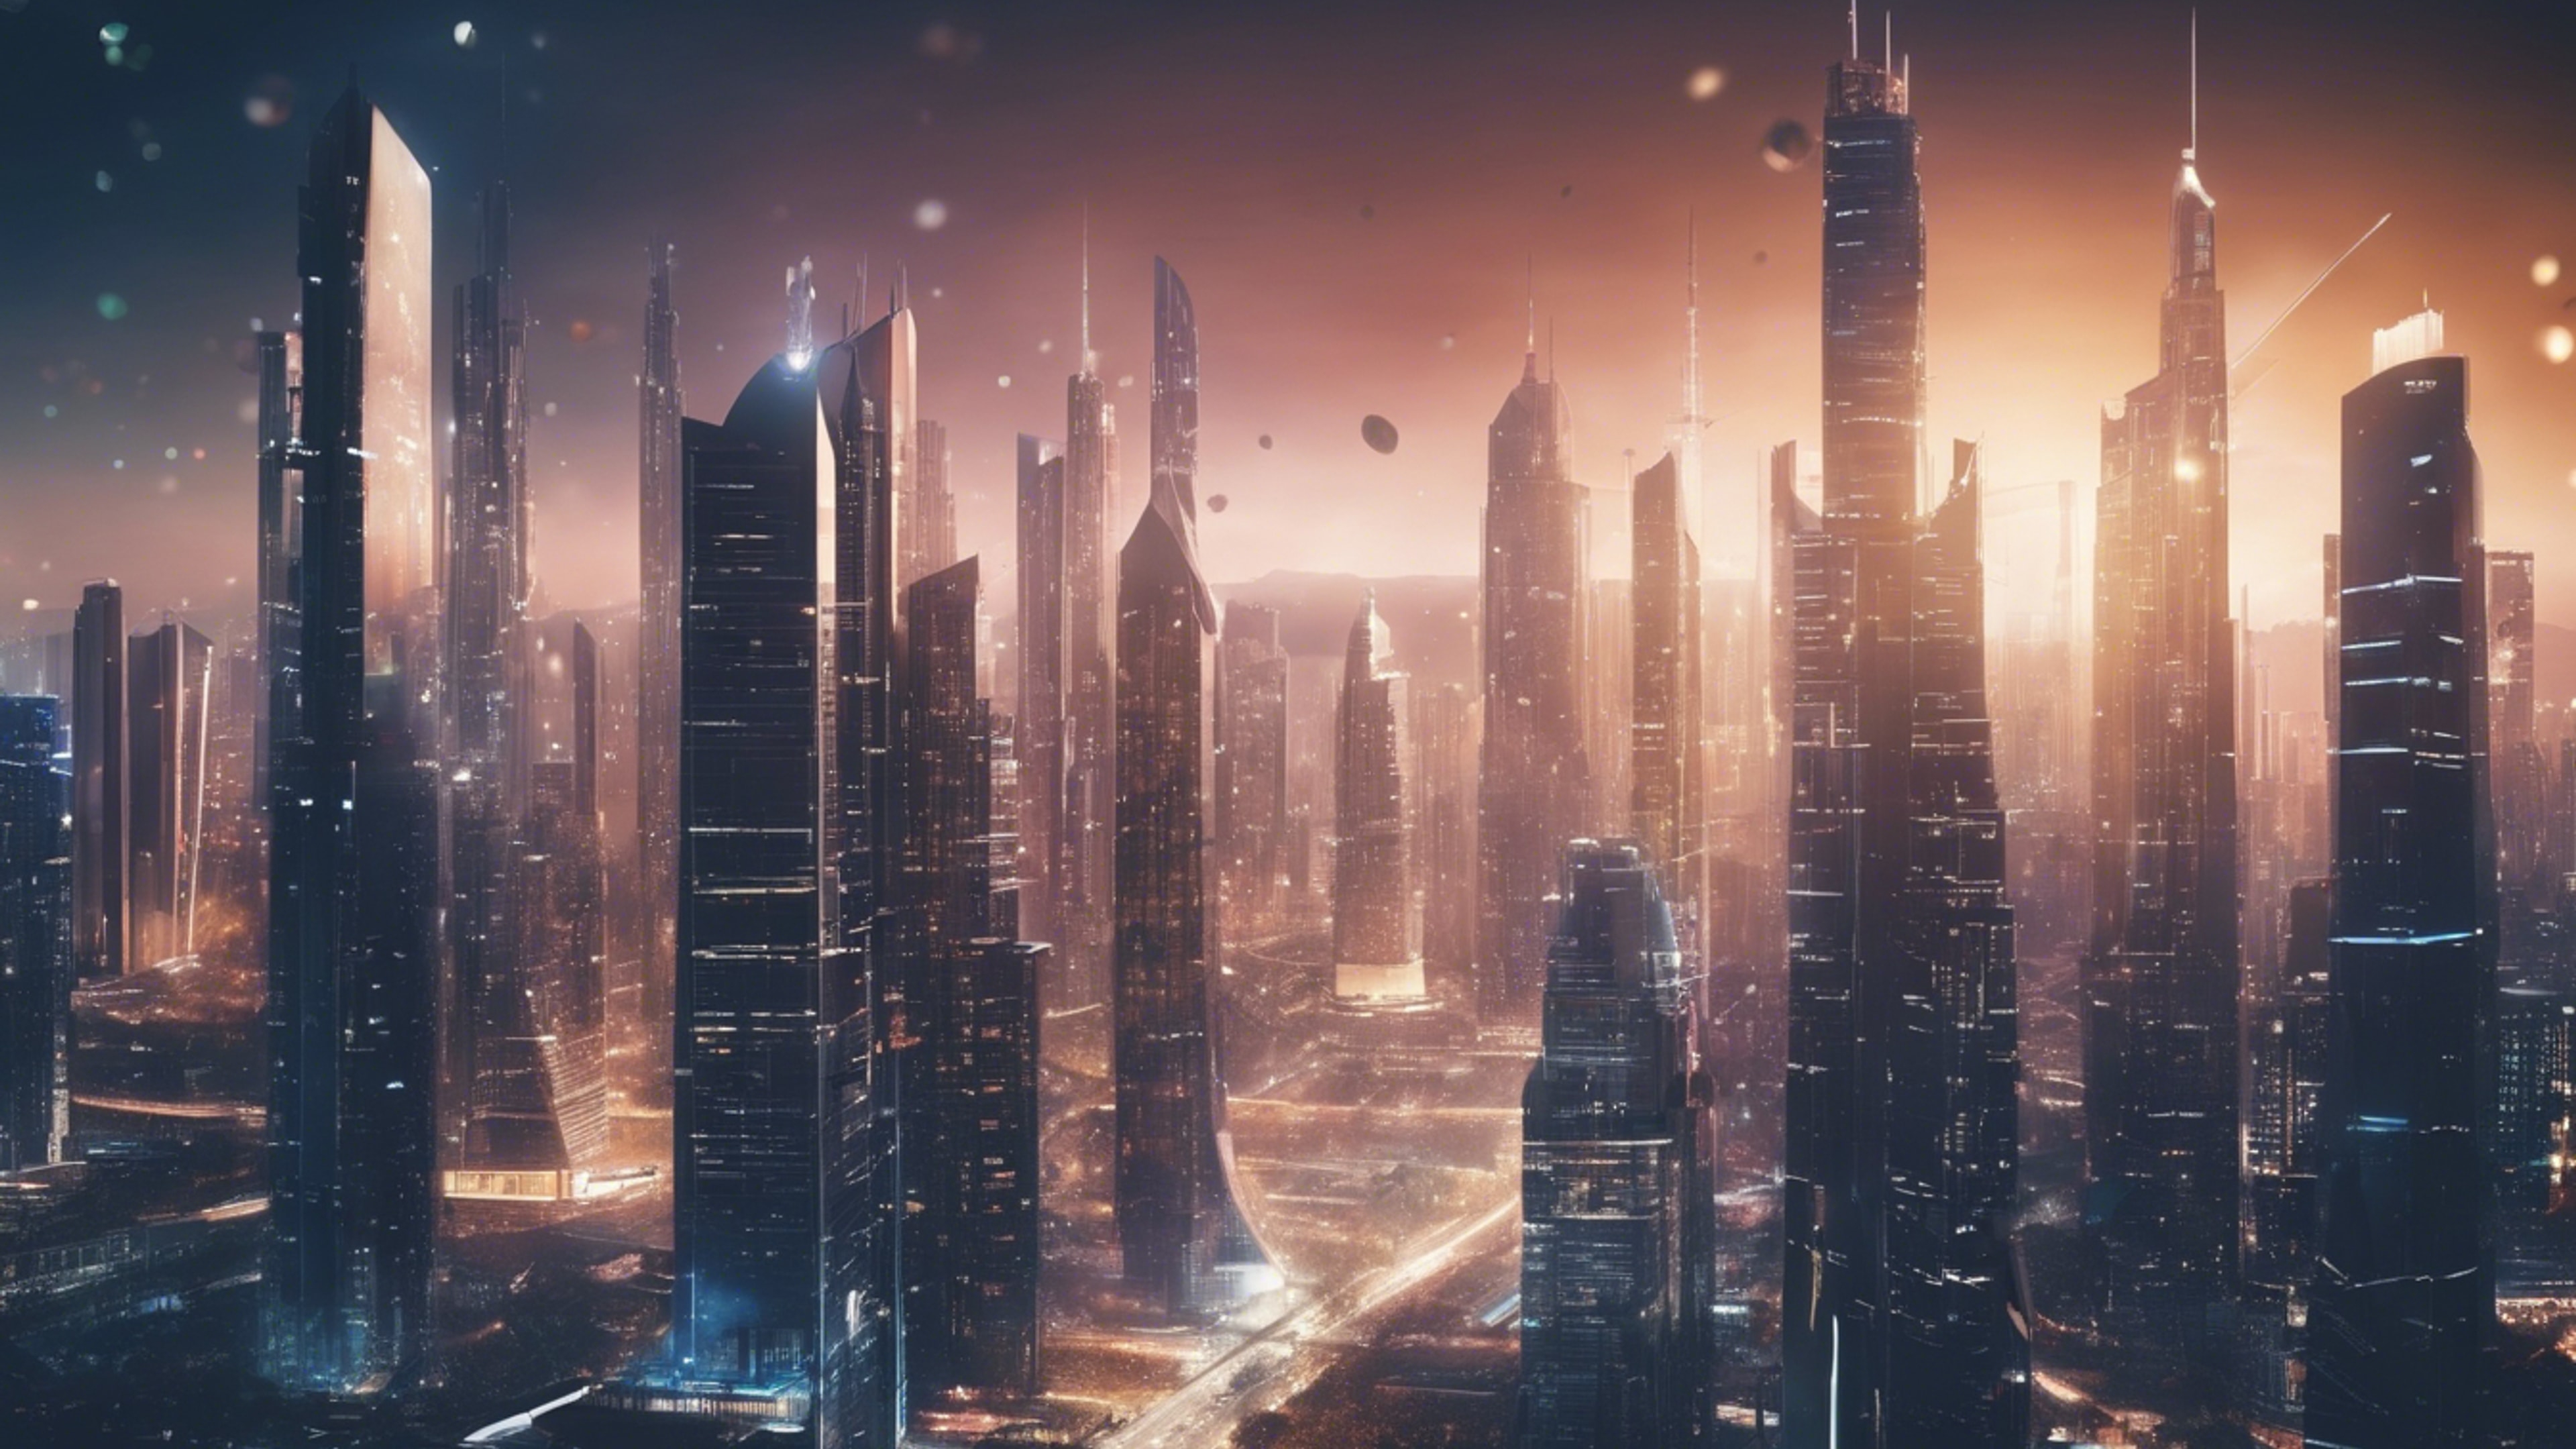 A detailed illustration of a megalopolis skyline with futuristic, AI-designed structures. Sfondo[5acce17a495b4f288757]